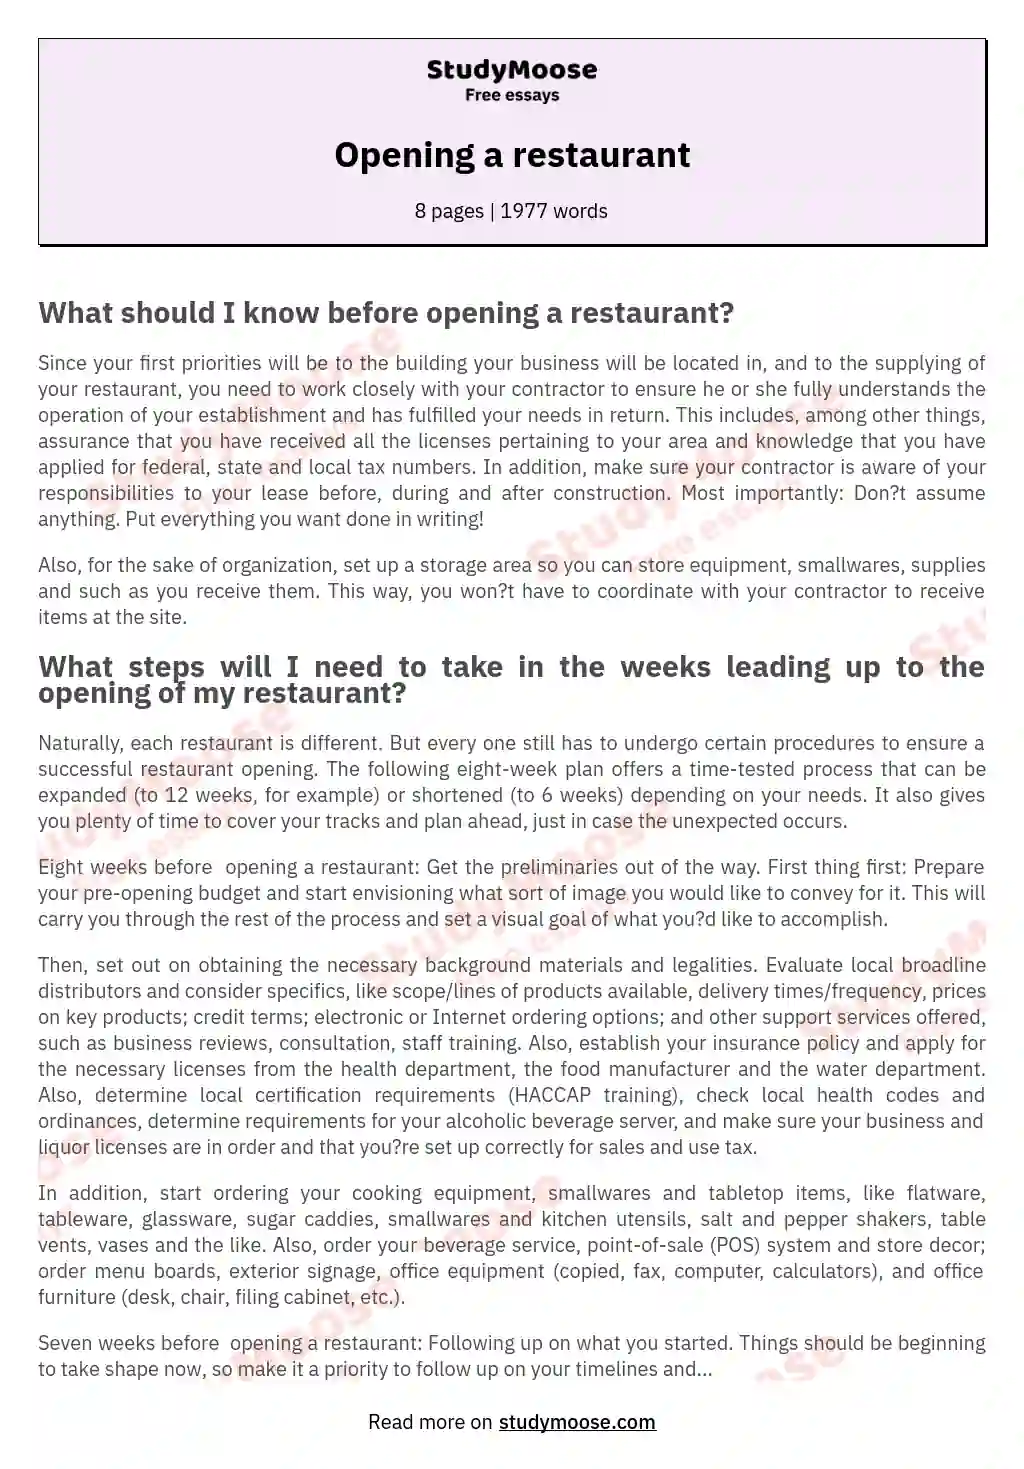 new restaurant essay